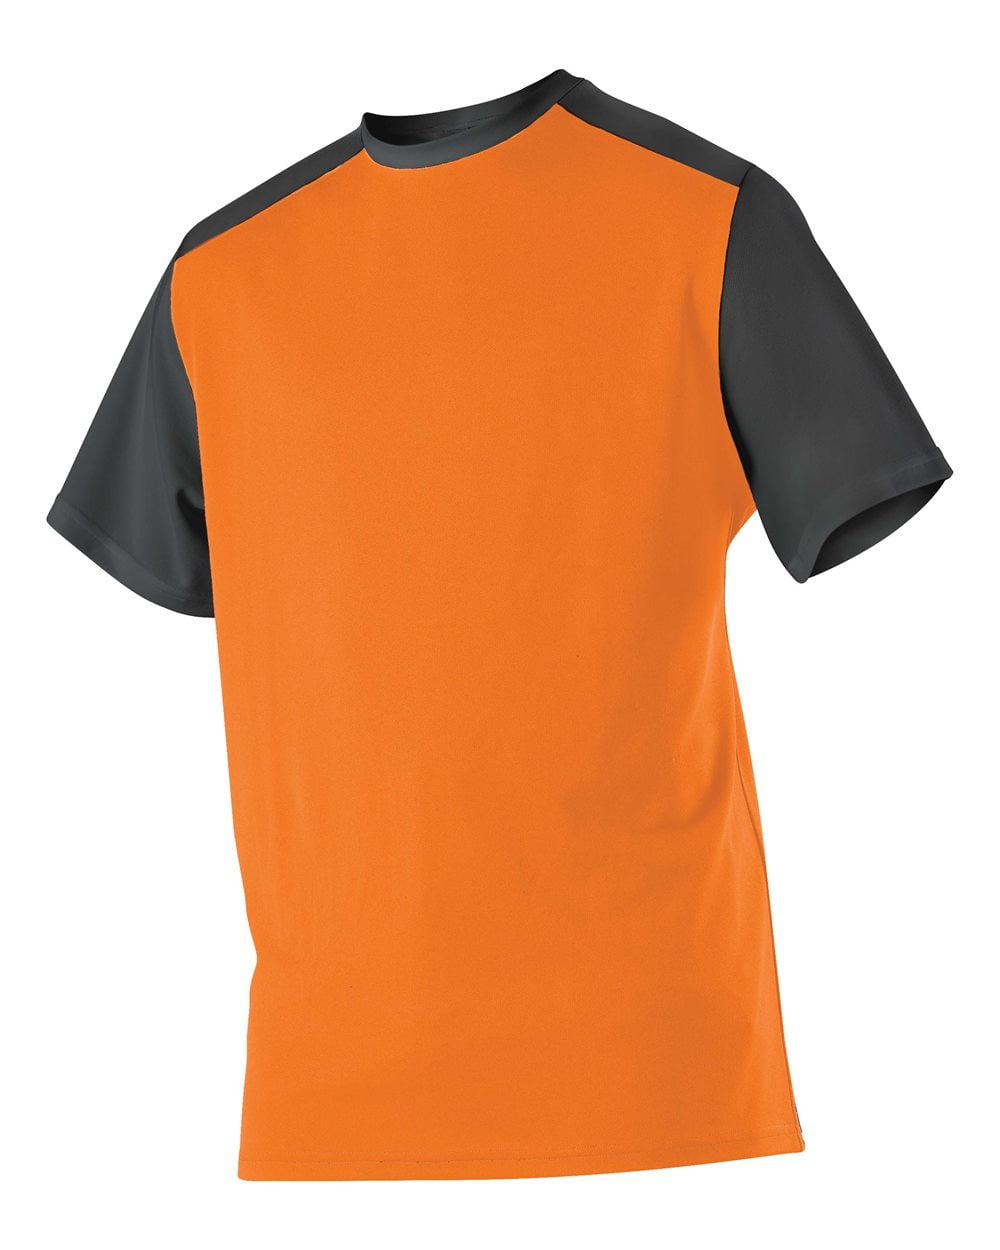 orange and black baseball shirt